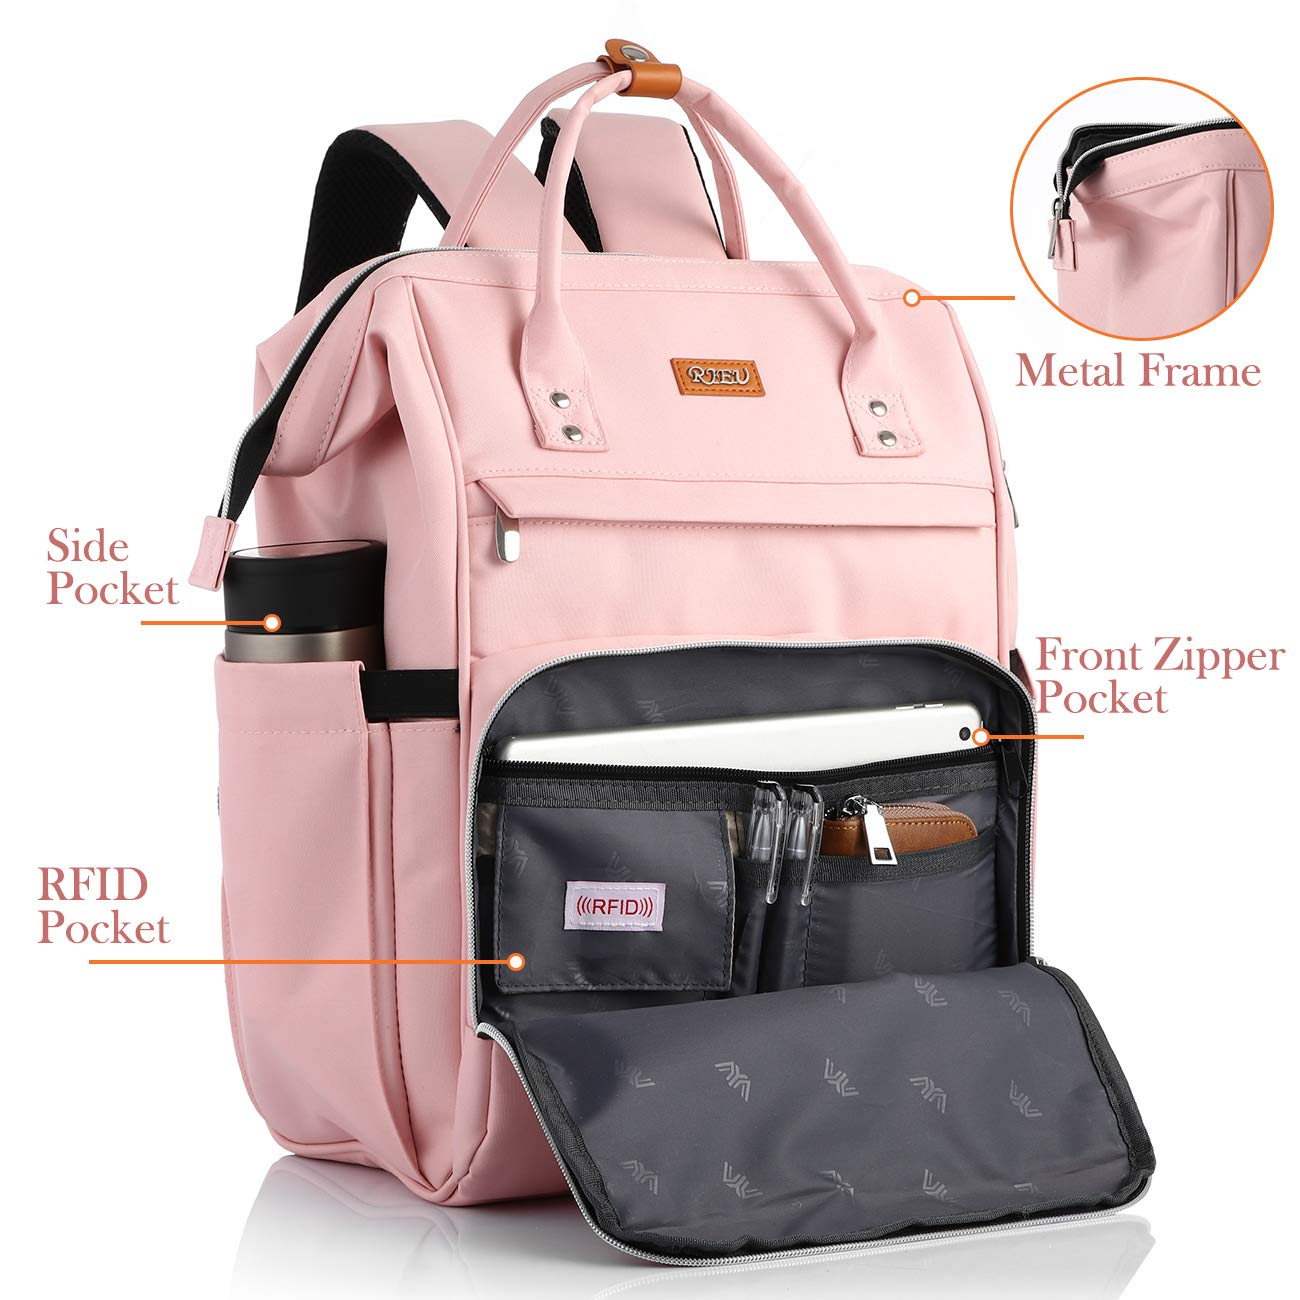 RJEU Backpack School,Backpack for Women,Bookbag for Teen Girls,Computer Laptop Bag for Teacher Nurses College,Waterproof